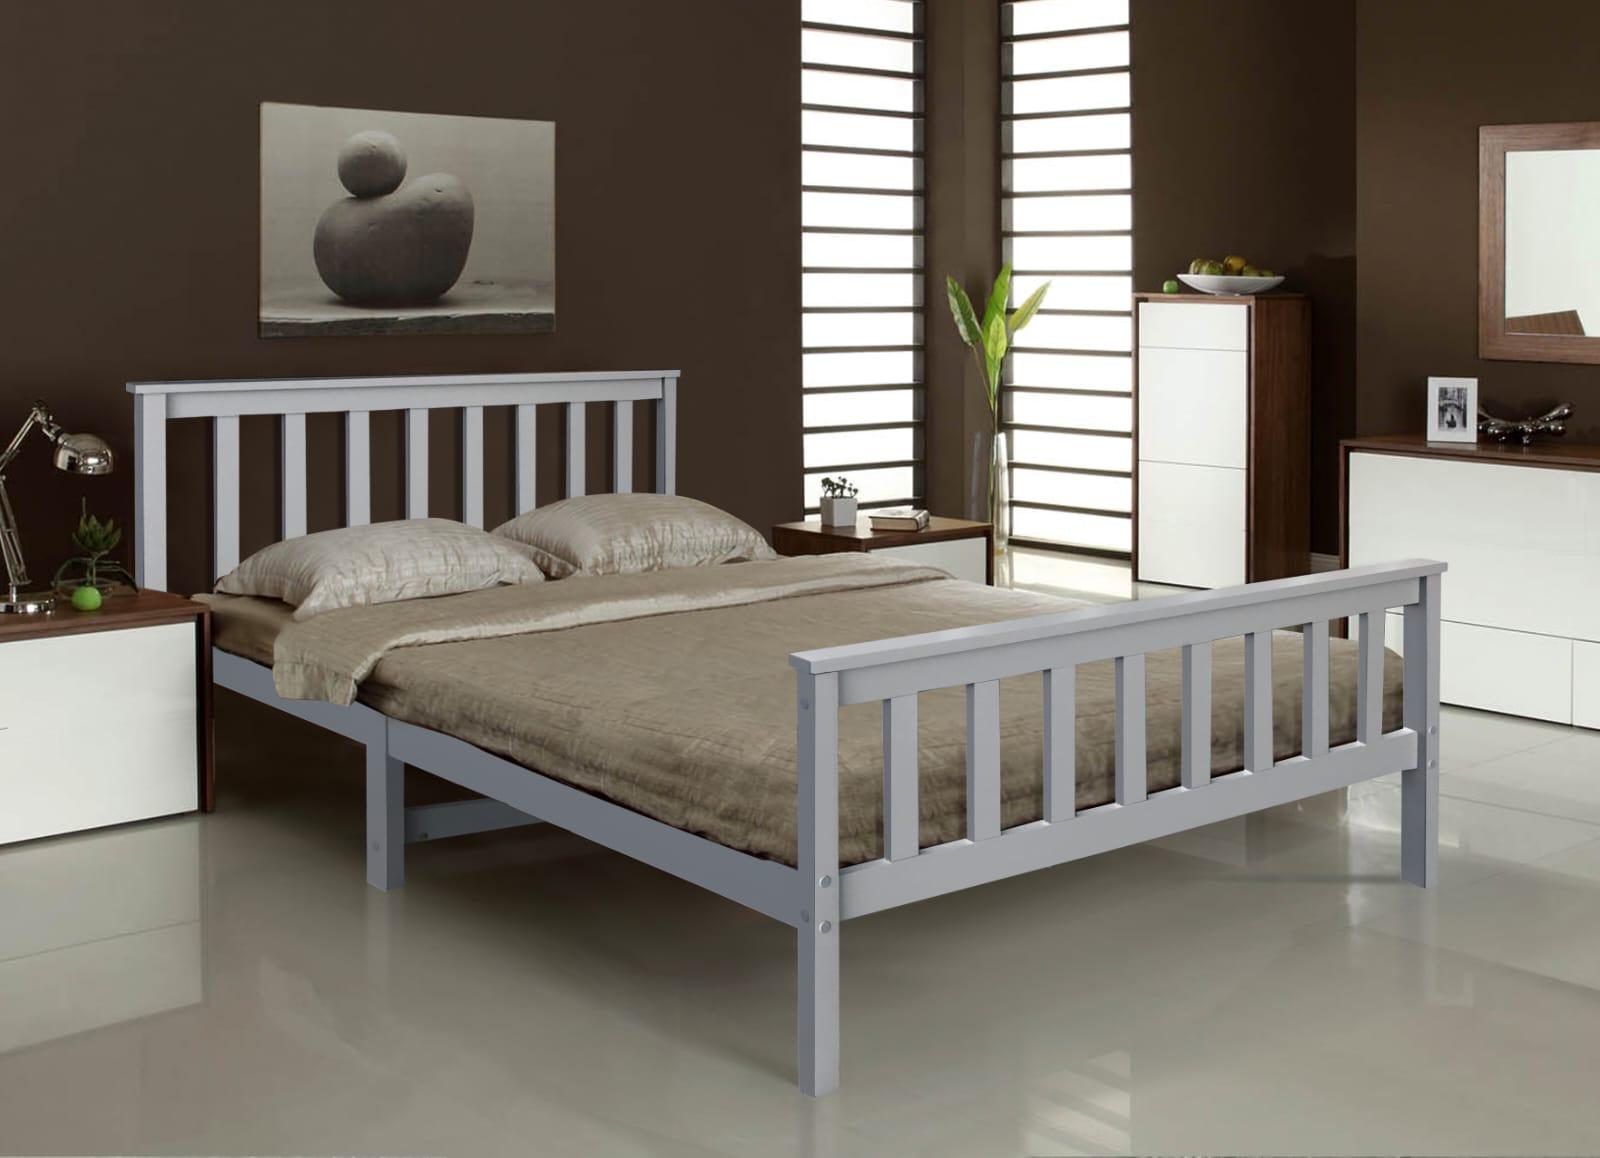 foam mattress and bed frame sets